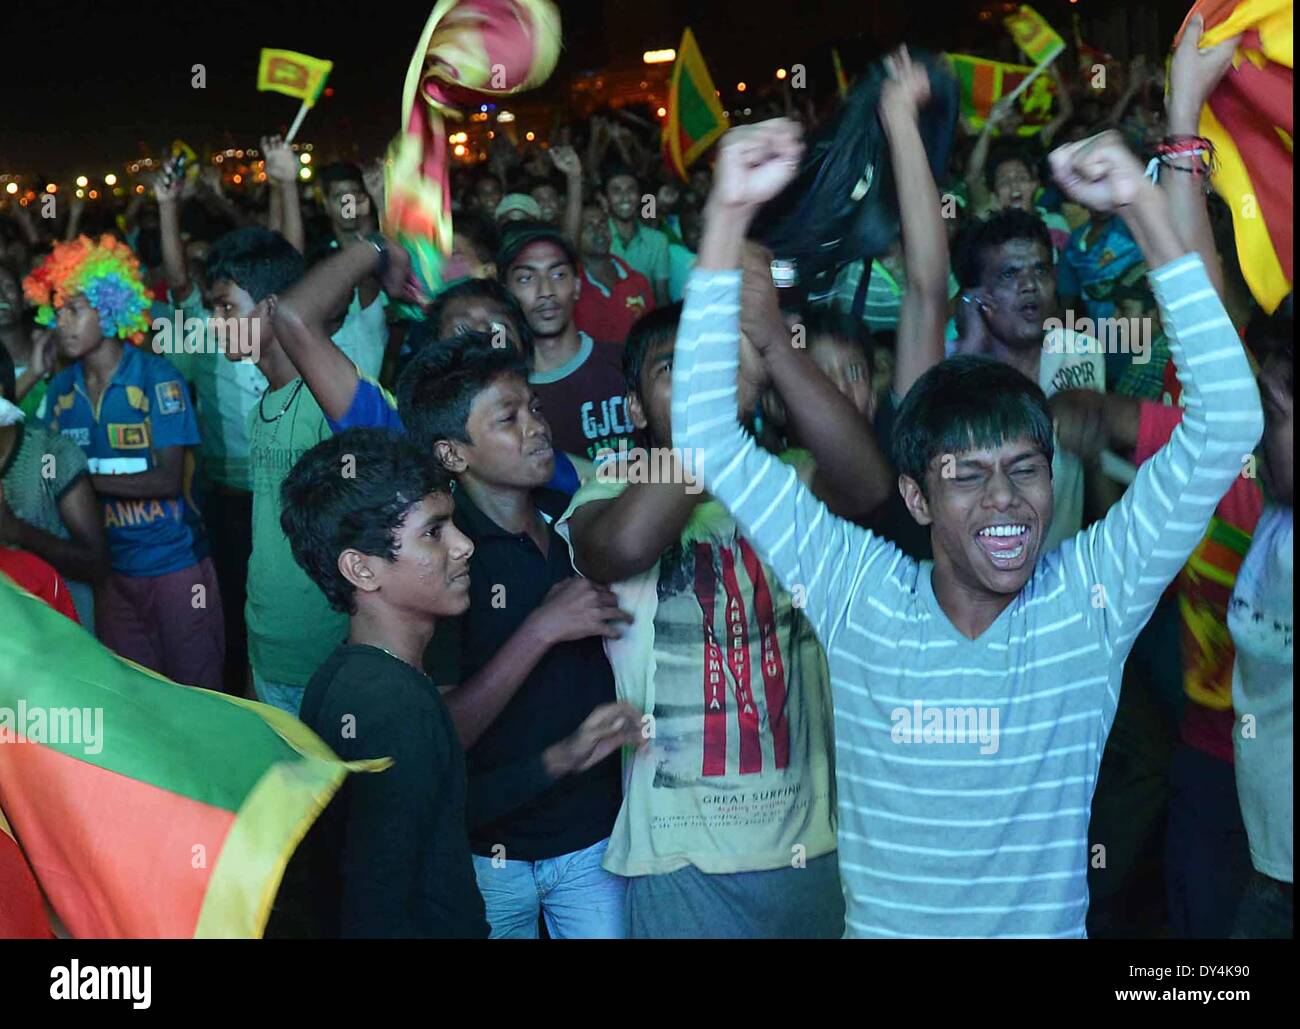 Colombo, Sri Lanka. 6th Apr, 2014. Fans of Sri Lanka celebrate in the street after their team won the ICC Twenty20 World Cup cricket final against India, in Colombo, capital of Sri Lanka, April 6, 2014. Credit:  Pushpika Karunaratne/Xinhua/Alamy Live News Stock Photo